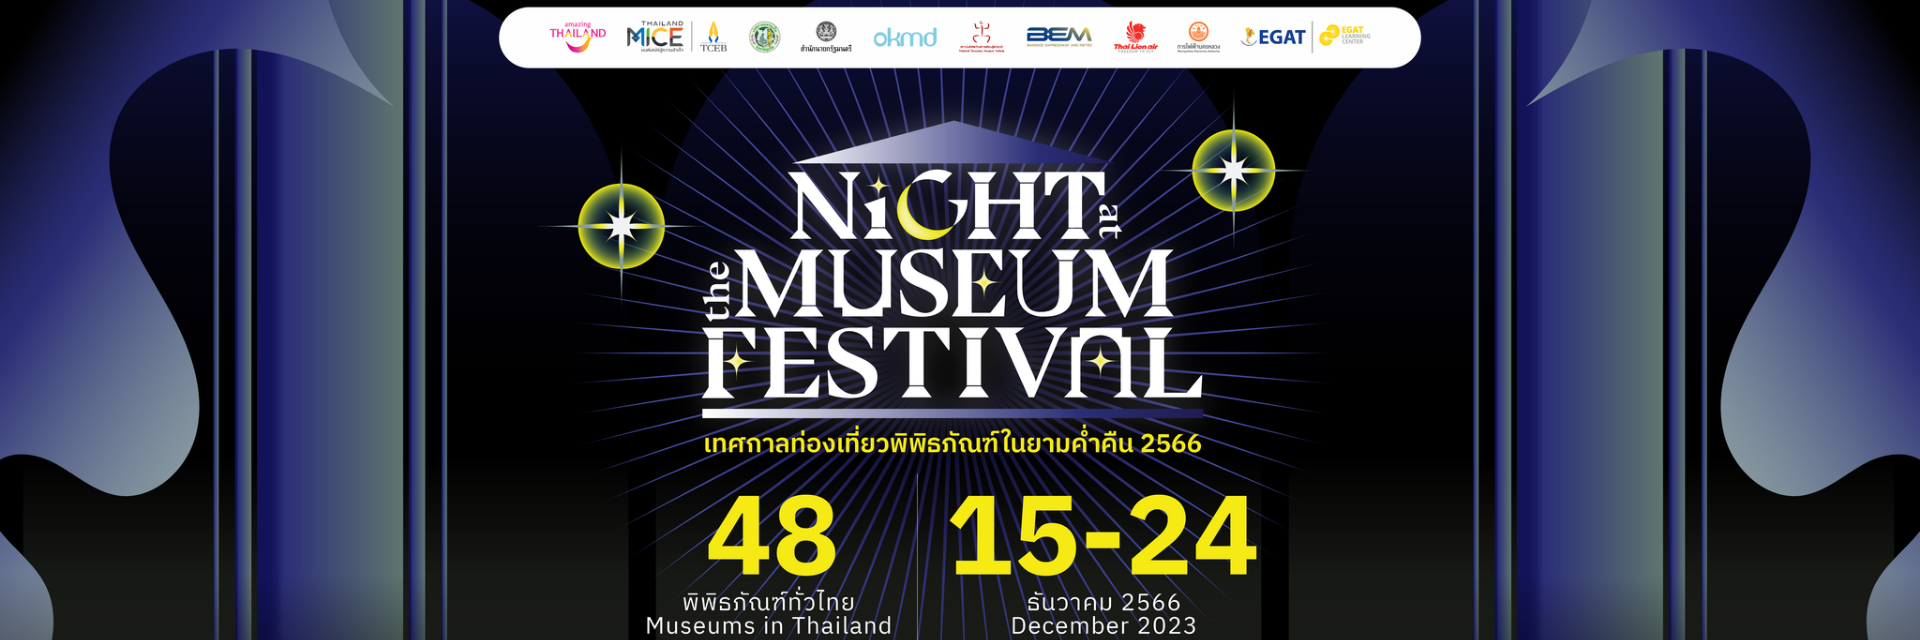 Night at The Museum festival 2023 เทศกาลท่องเที่ยวพิพิธภัณฑ์ในยามค่ำคืน